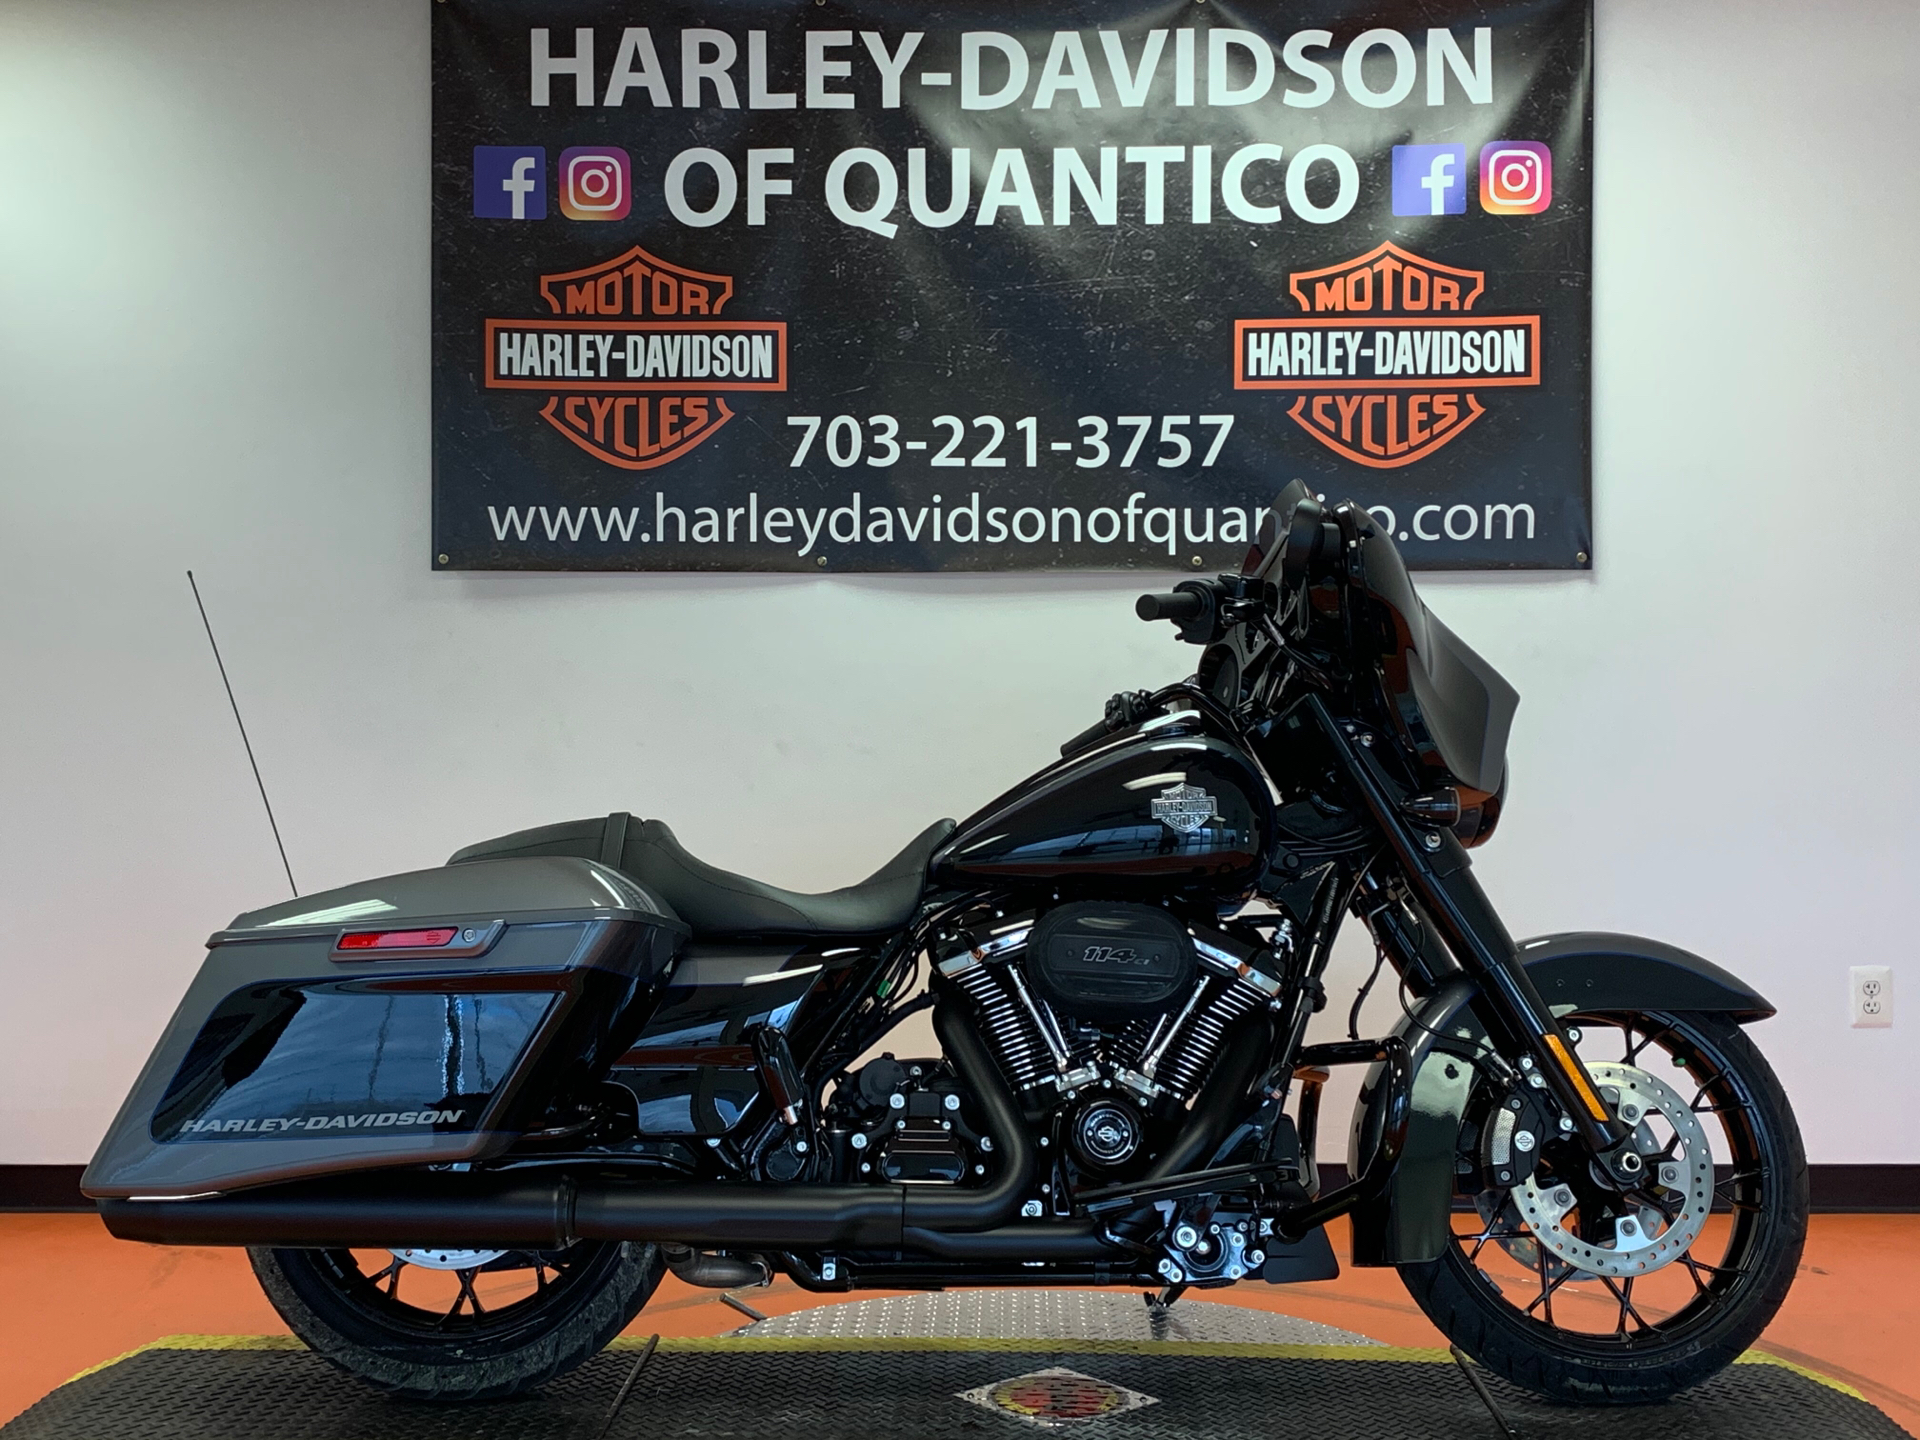 New 2021 Harley Davidson Street Glide Special Gauntlet Gray Metallic Vivid Black Black Pearl Option Motorcycles In Dumfries Va 604512